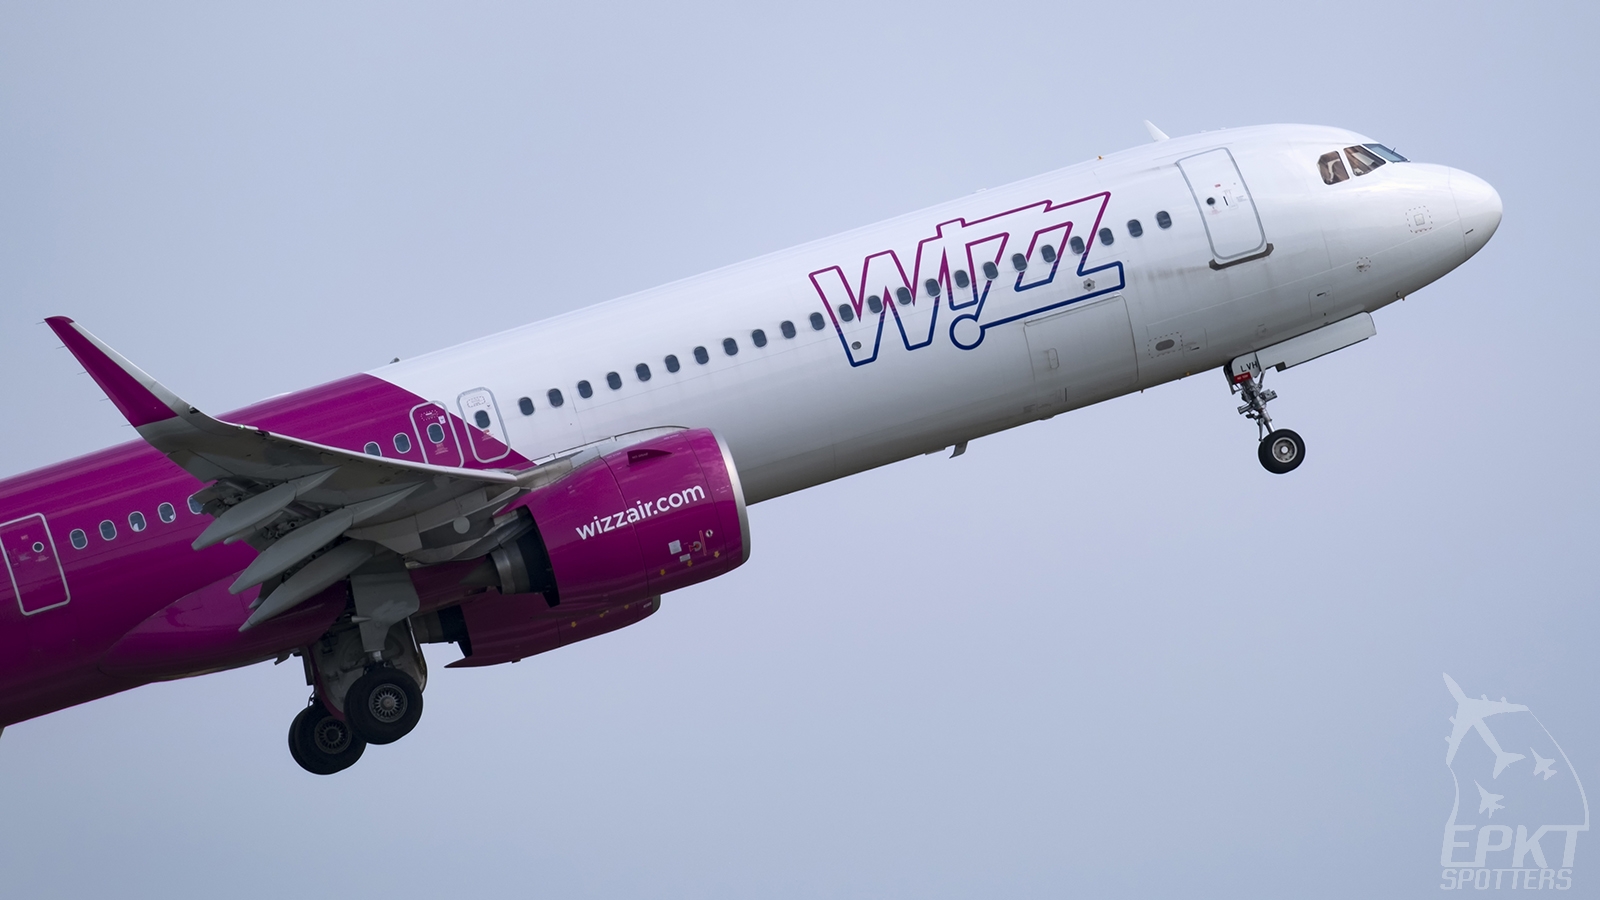 HA-LVH - Airbus A321 -271NX (Wizz Air) / Pyrzowice - Katowice Poland [EPKT/KTW]